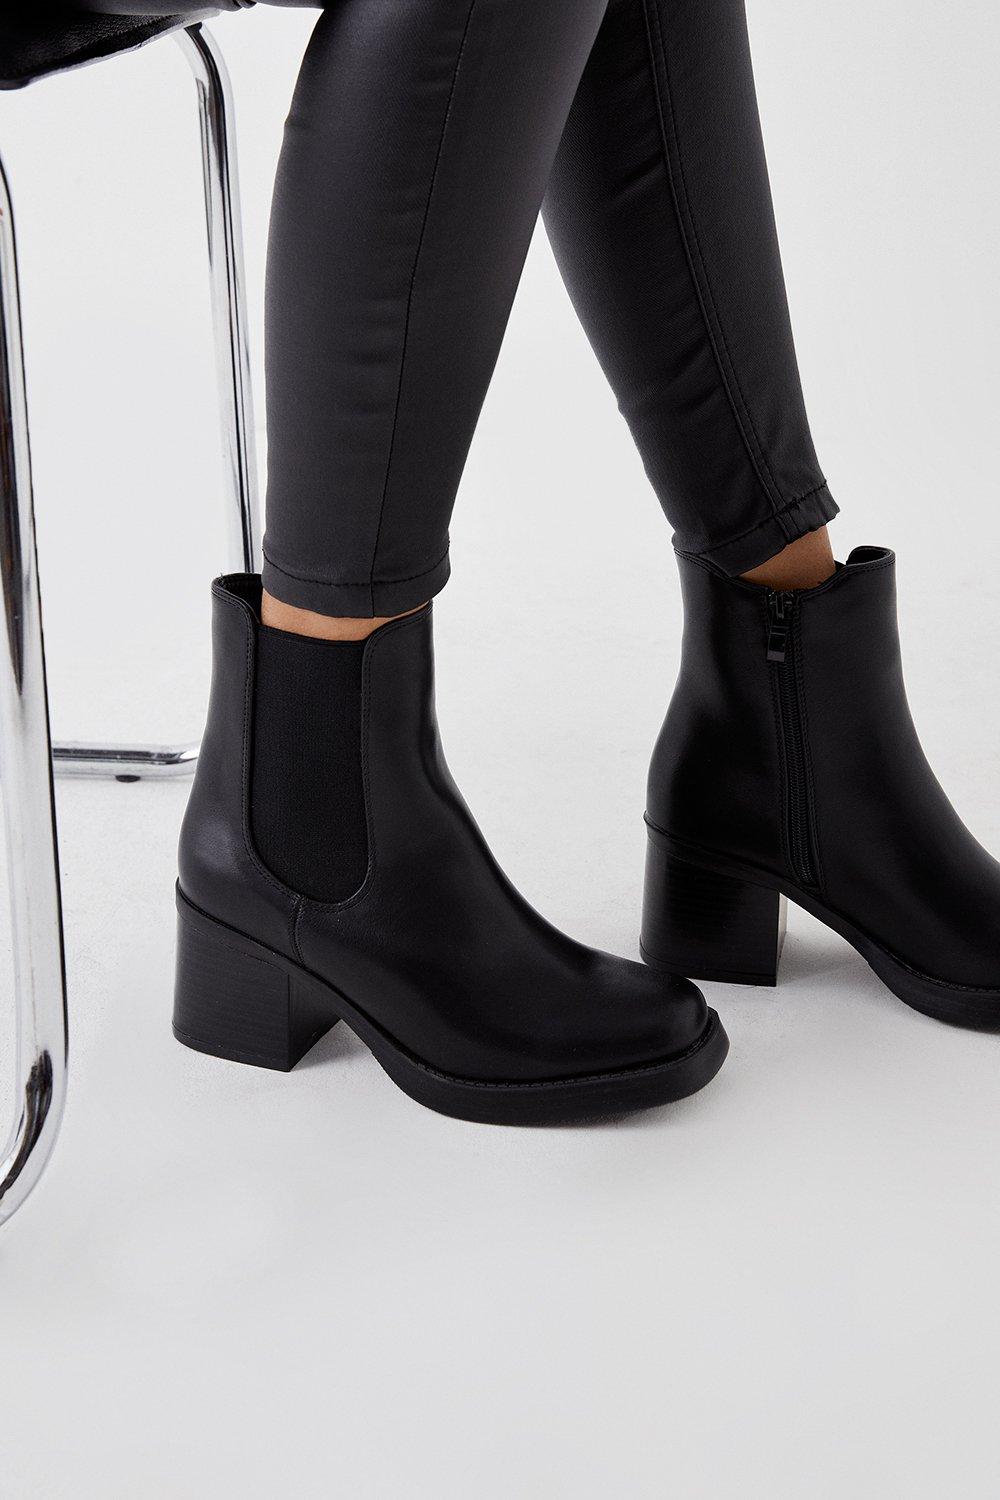 Women’s Faith: Alberta Square Toe Stack Heel Ankle Boots - black - 4